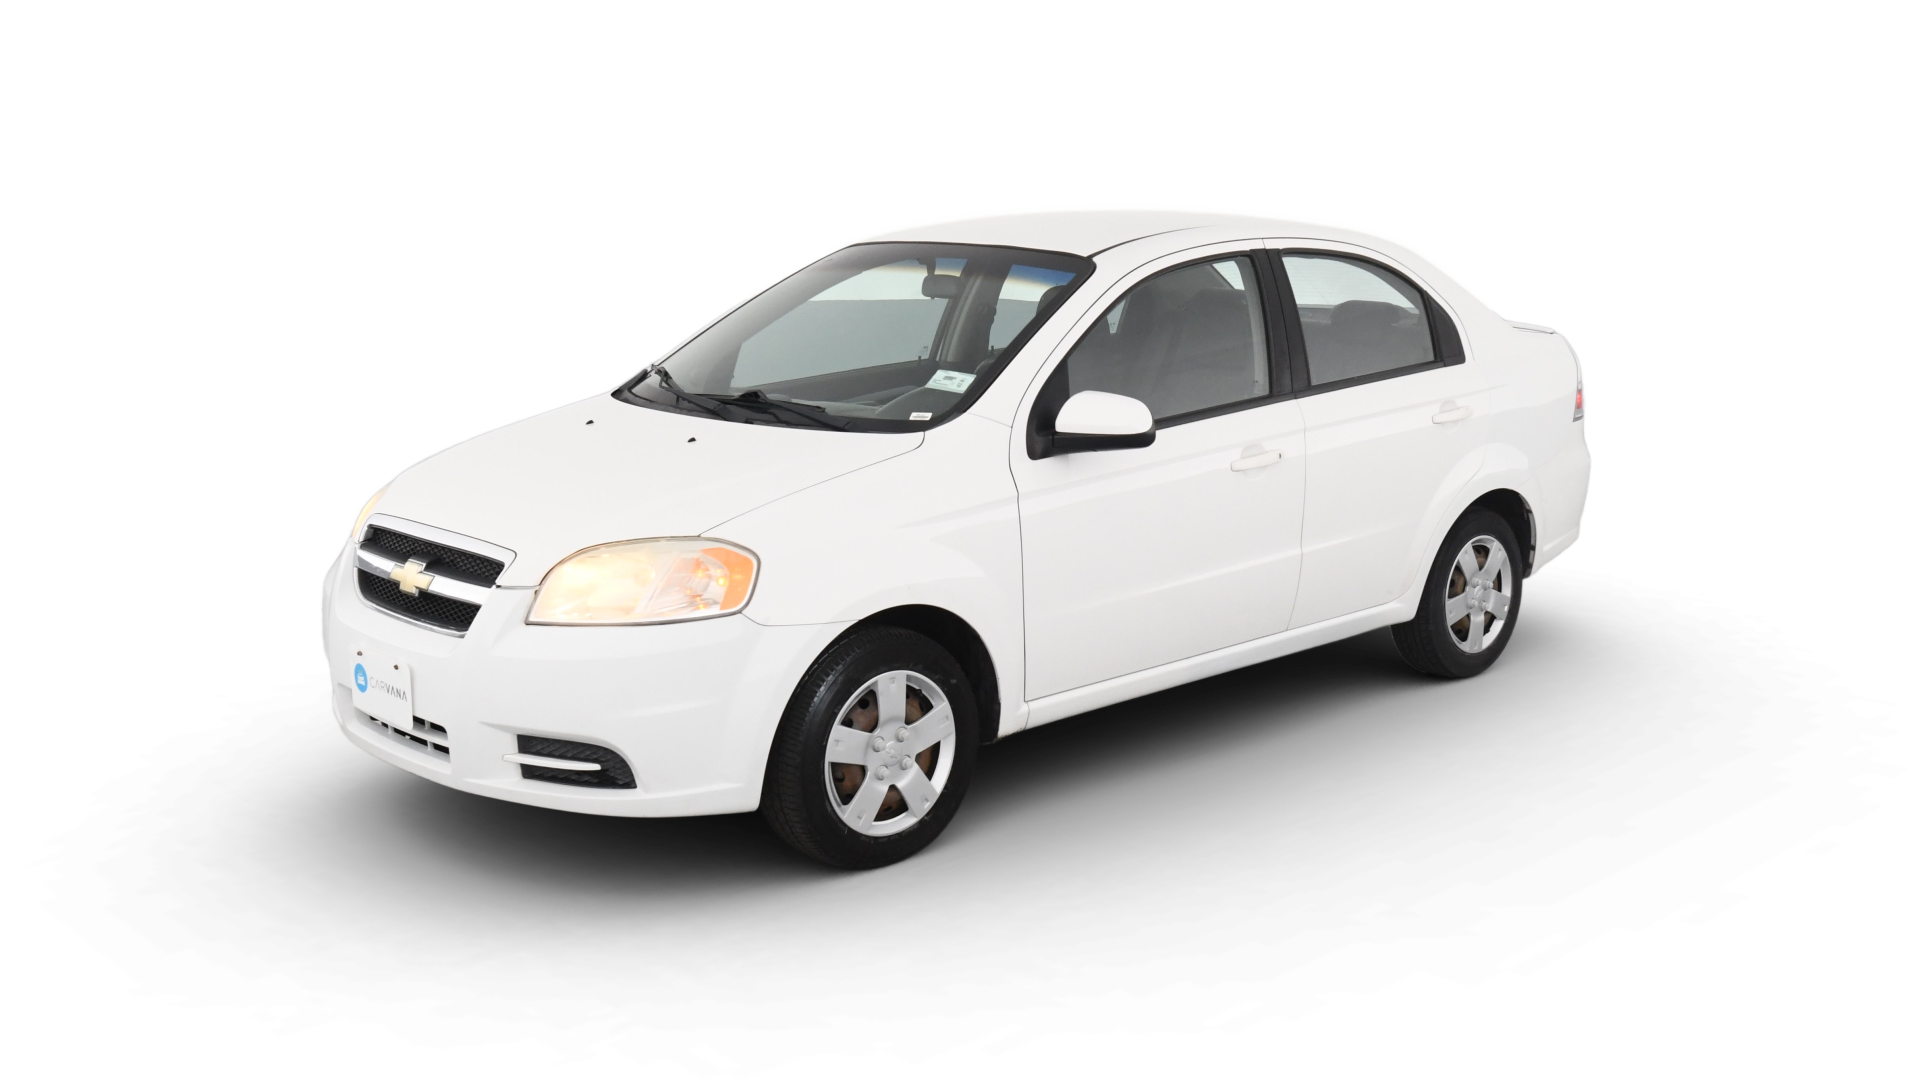 Used 2010 Chevrolet Aveo For Sale Online | Carvana